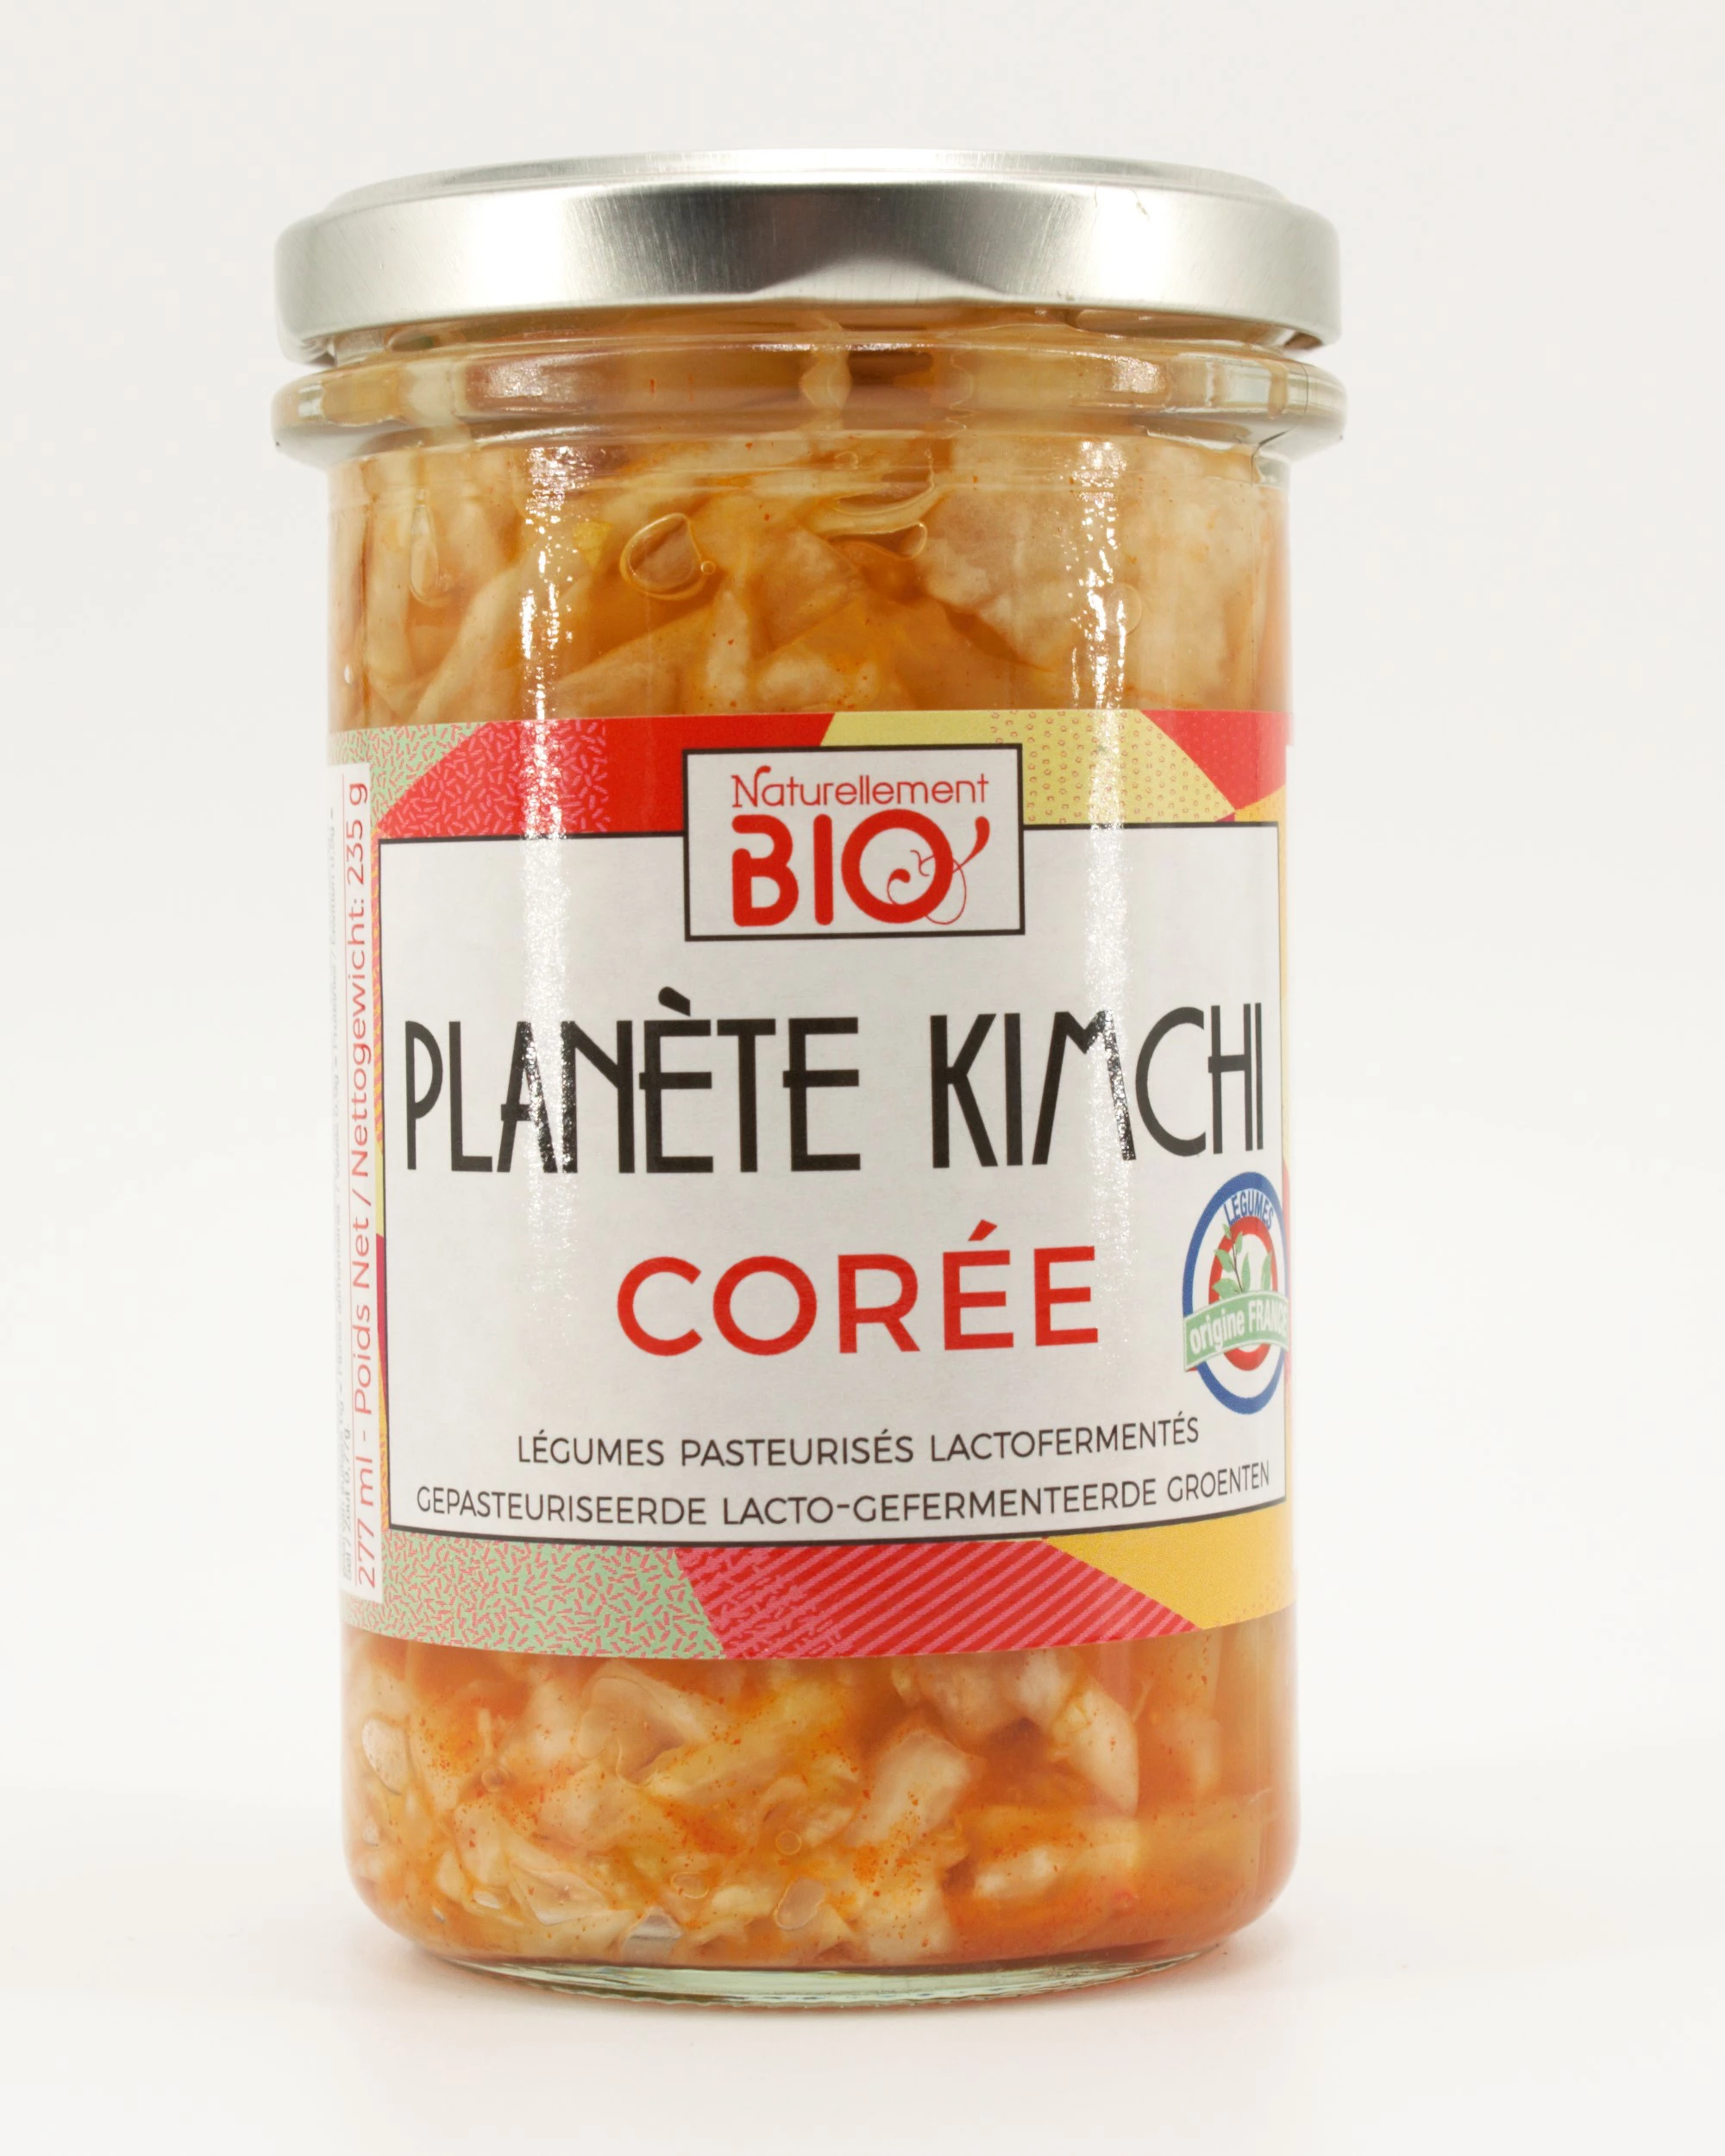 Planete Kimchi Coree Bio 250g